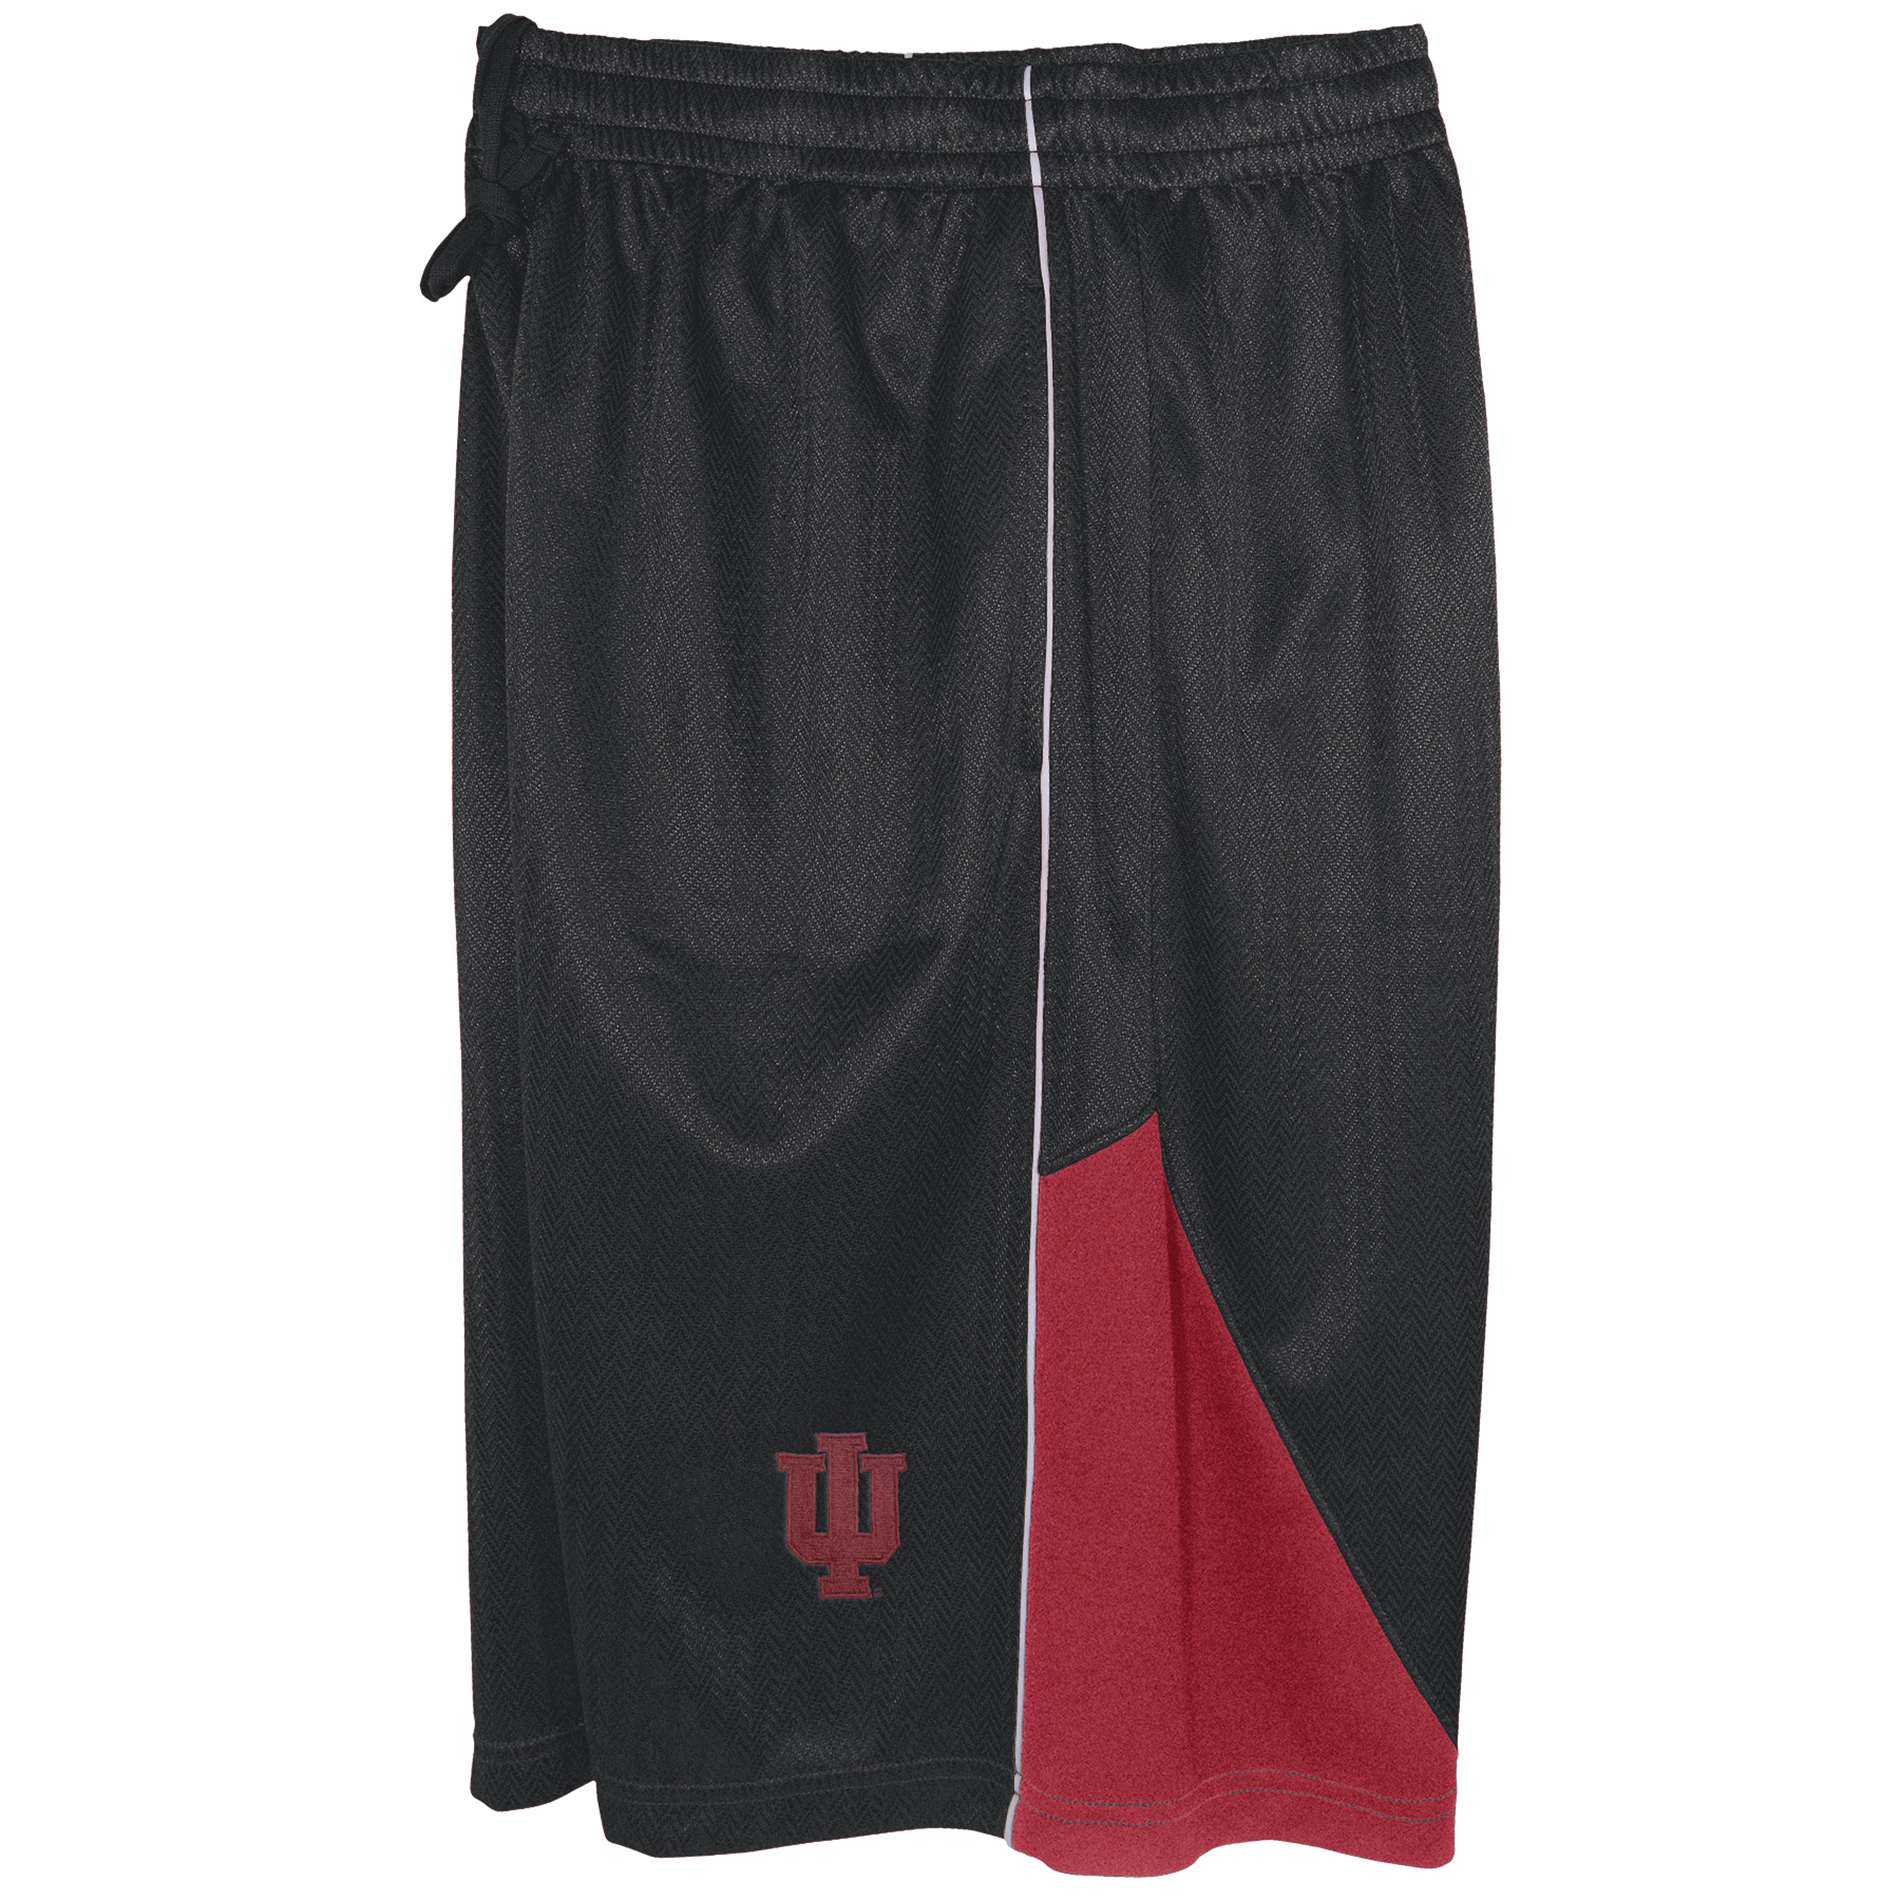 NCAA Men's Indiana Hoosiers Basketball Shorts